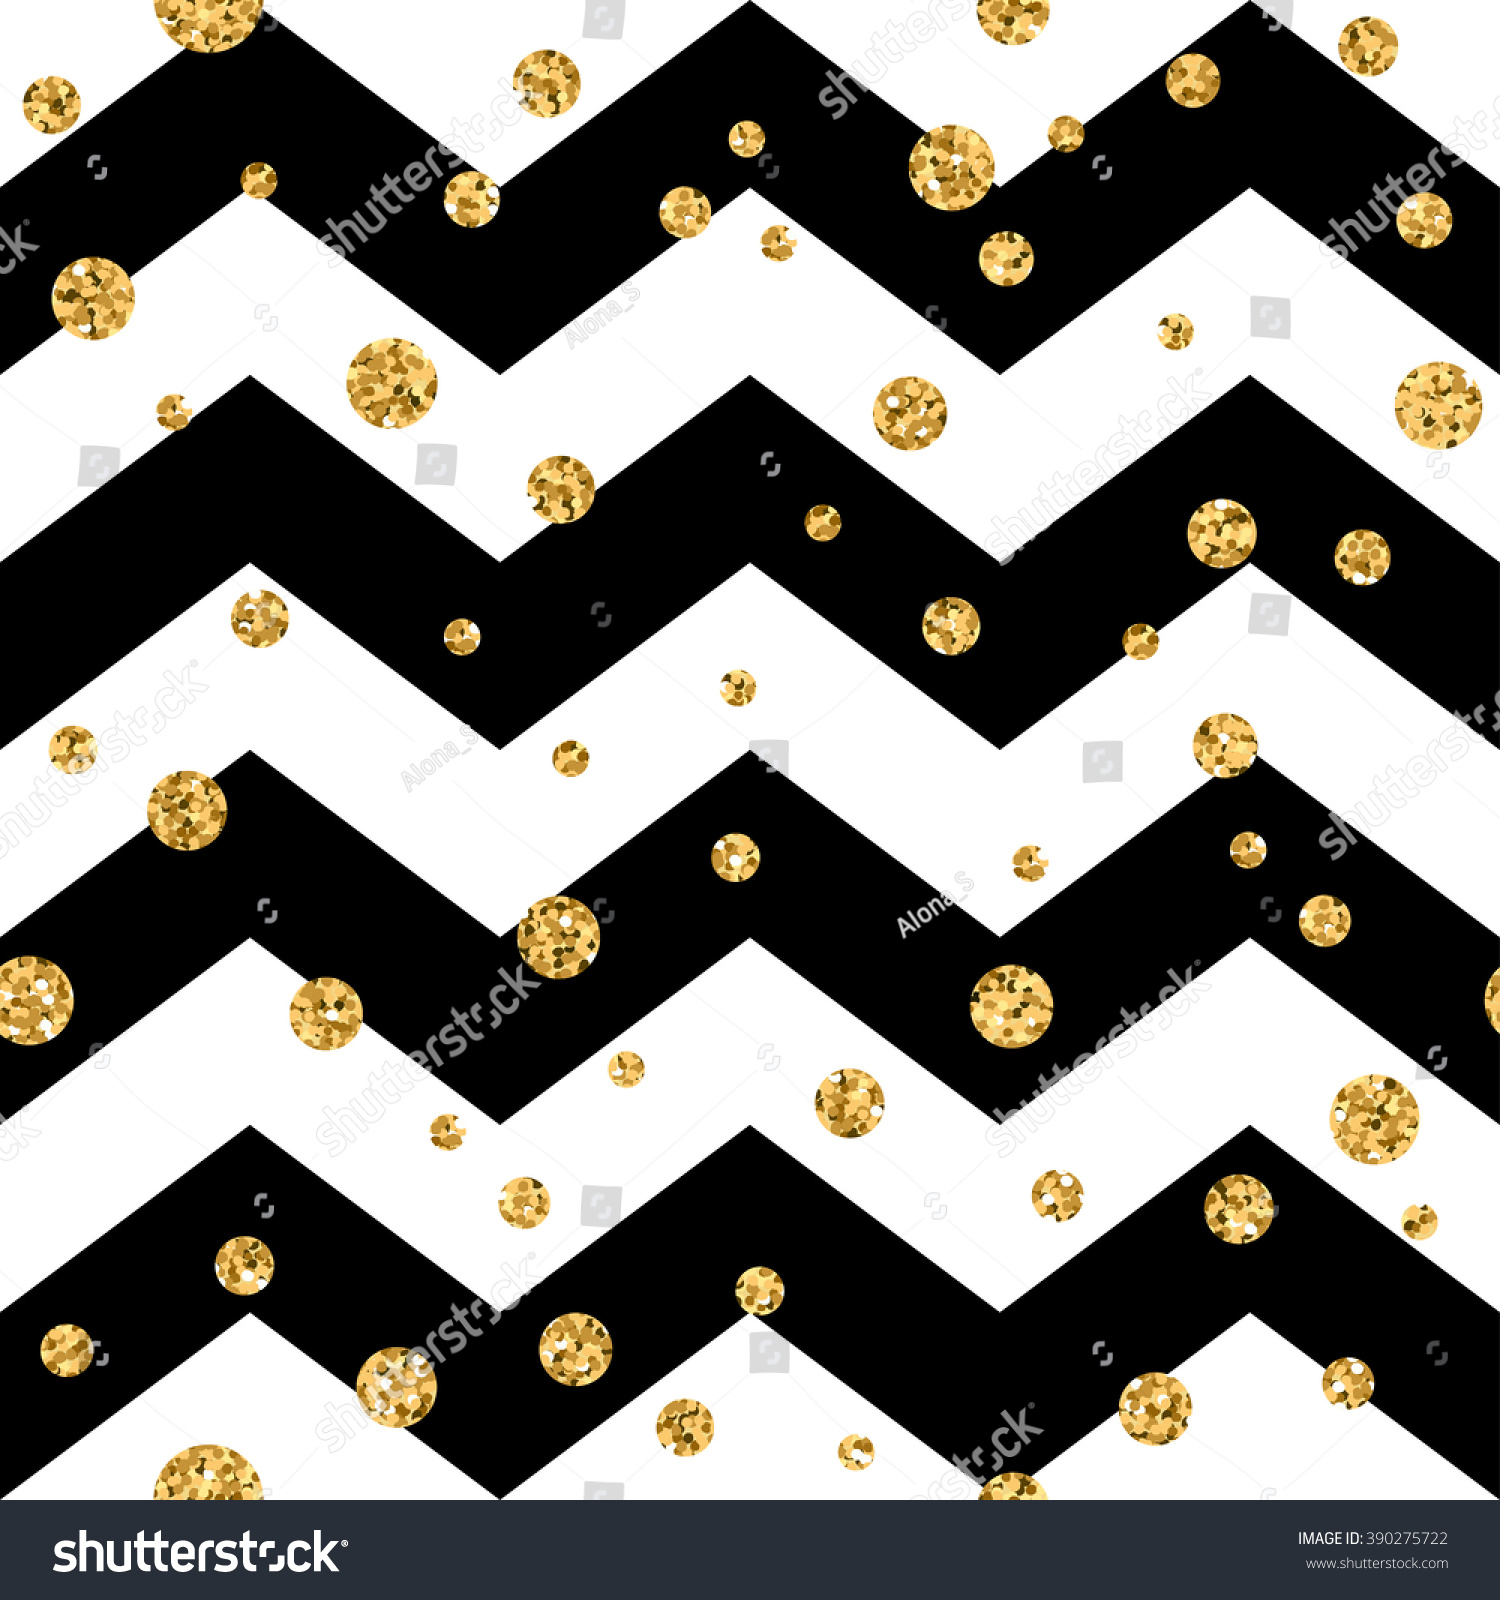 zag zig backgrounds tumblr Dot Confetti Gold Golden Pattern. Polka Glitter Seamless